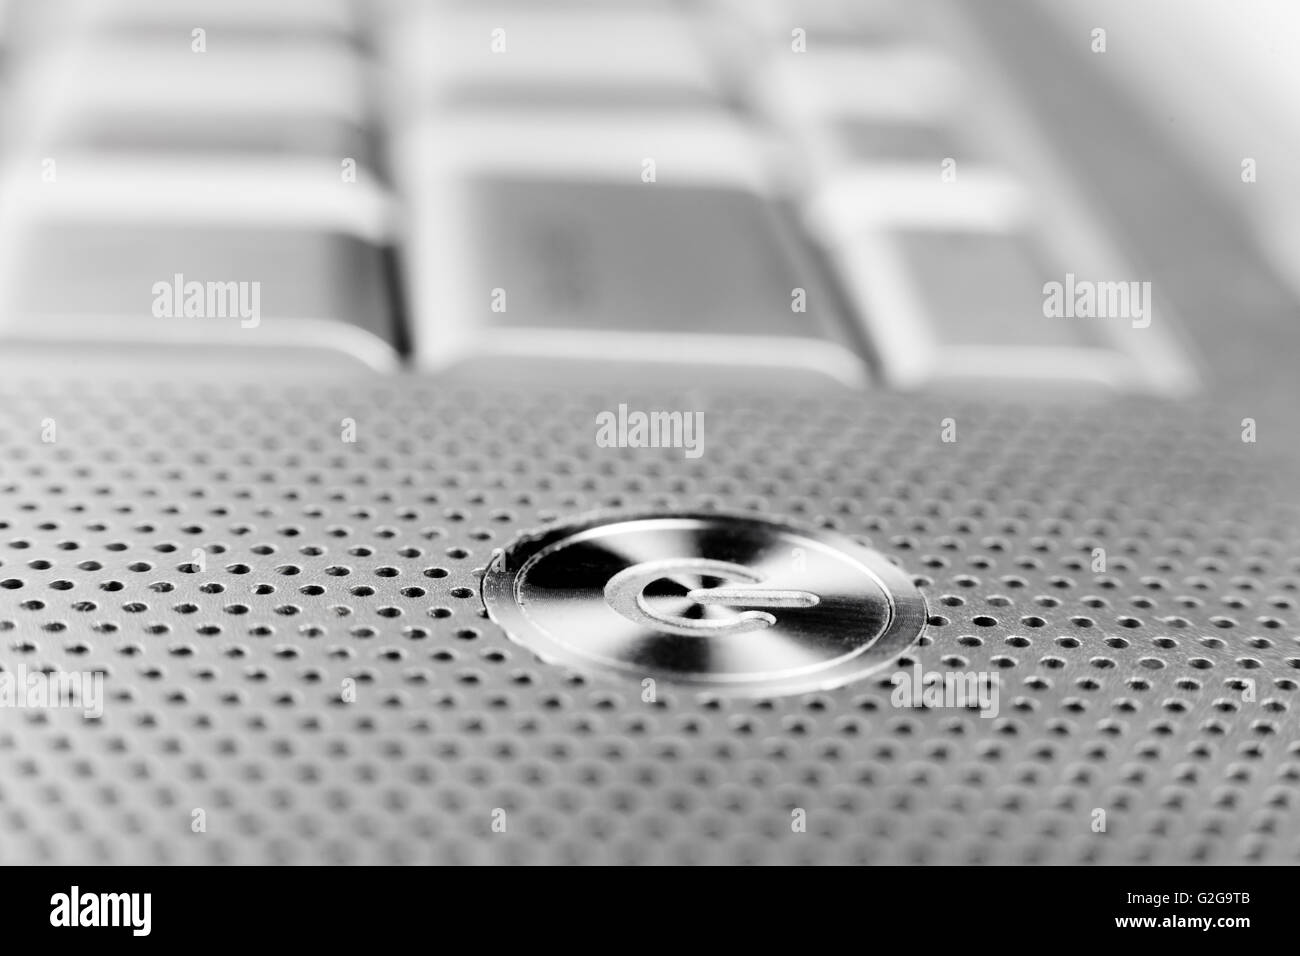 silver color laptop power button macro closeup  with holes grid arround Stock Photo